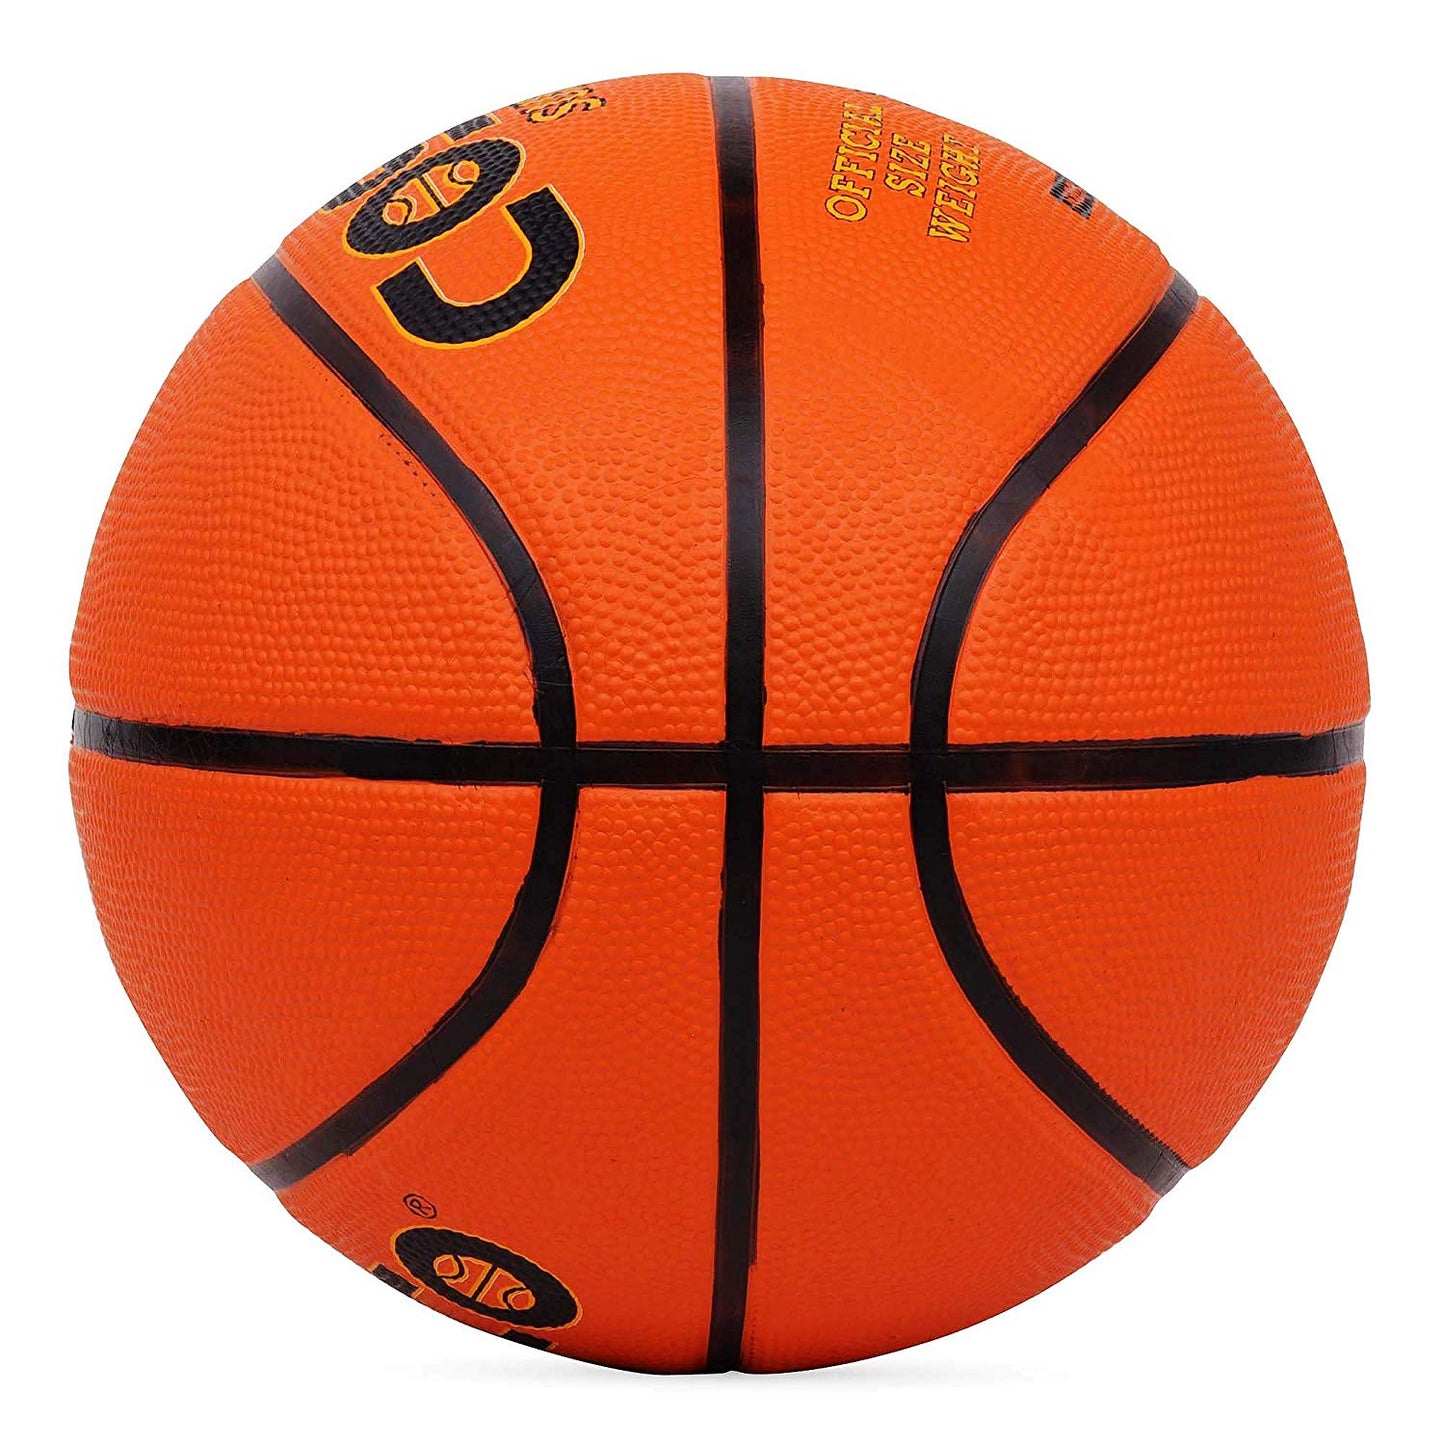 Cosco Dribble Basket Ball (Orange) - Best Price online Prokicksports.com